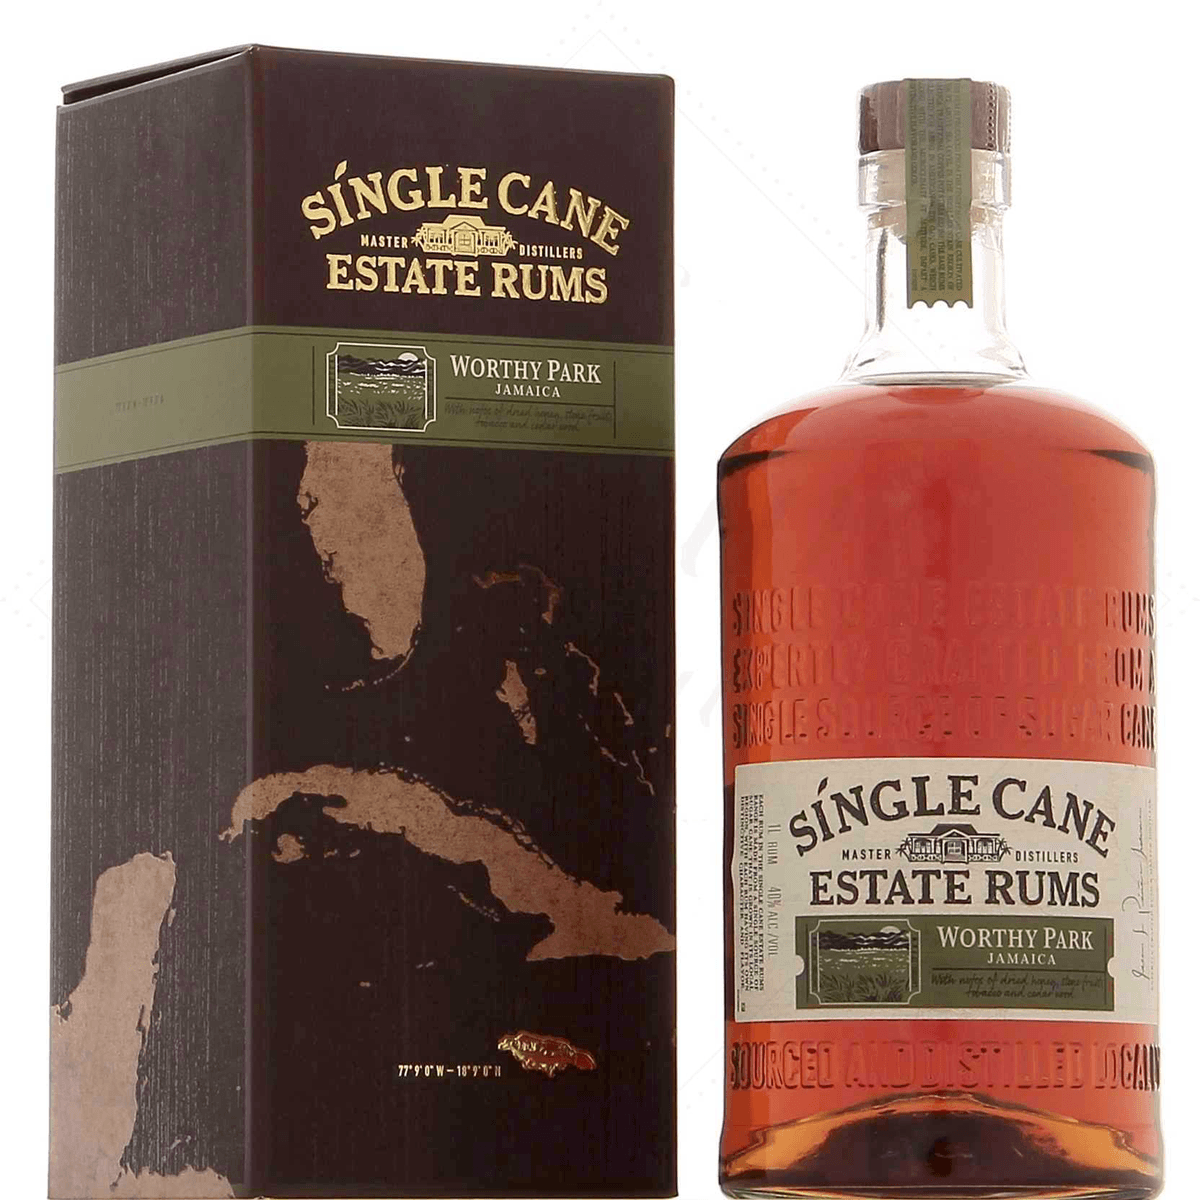 Single Cane Estate Rums Worthy Park Jamaica 40% Vol. 1L In Giftbox